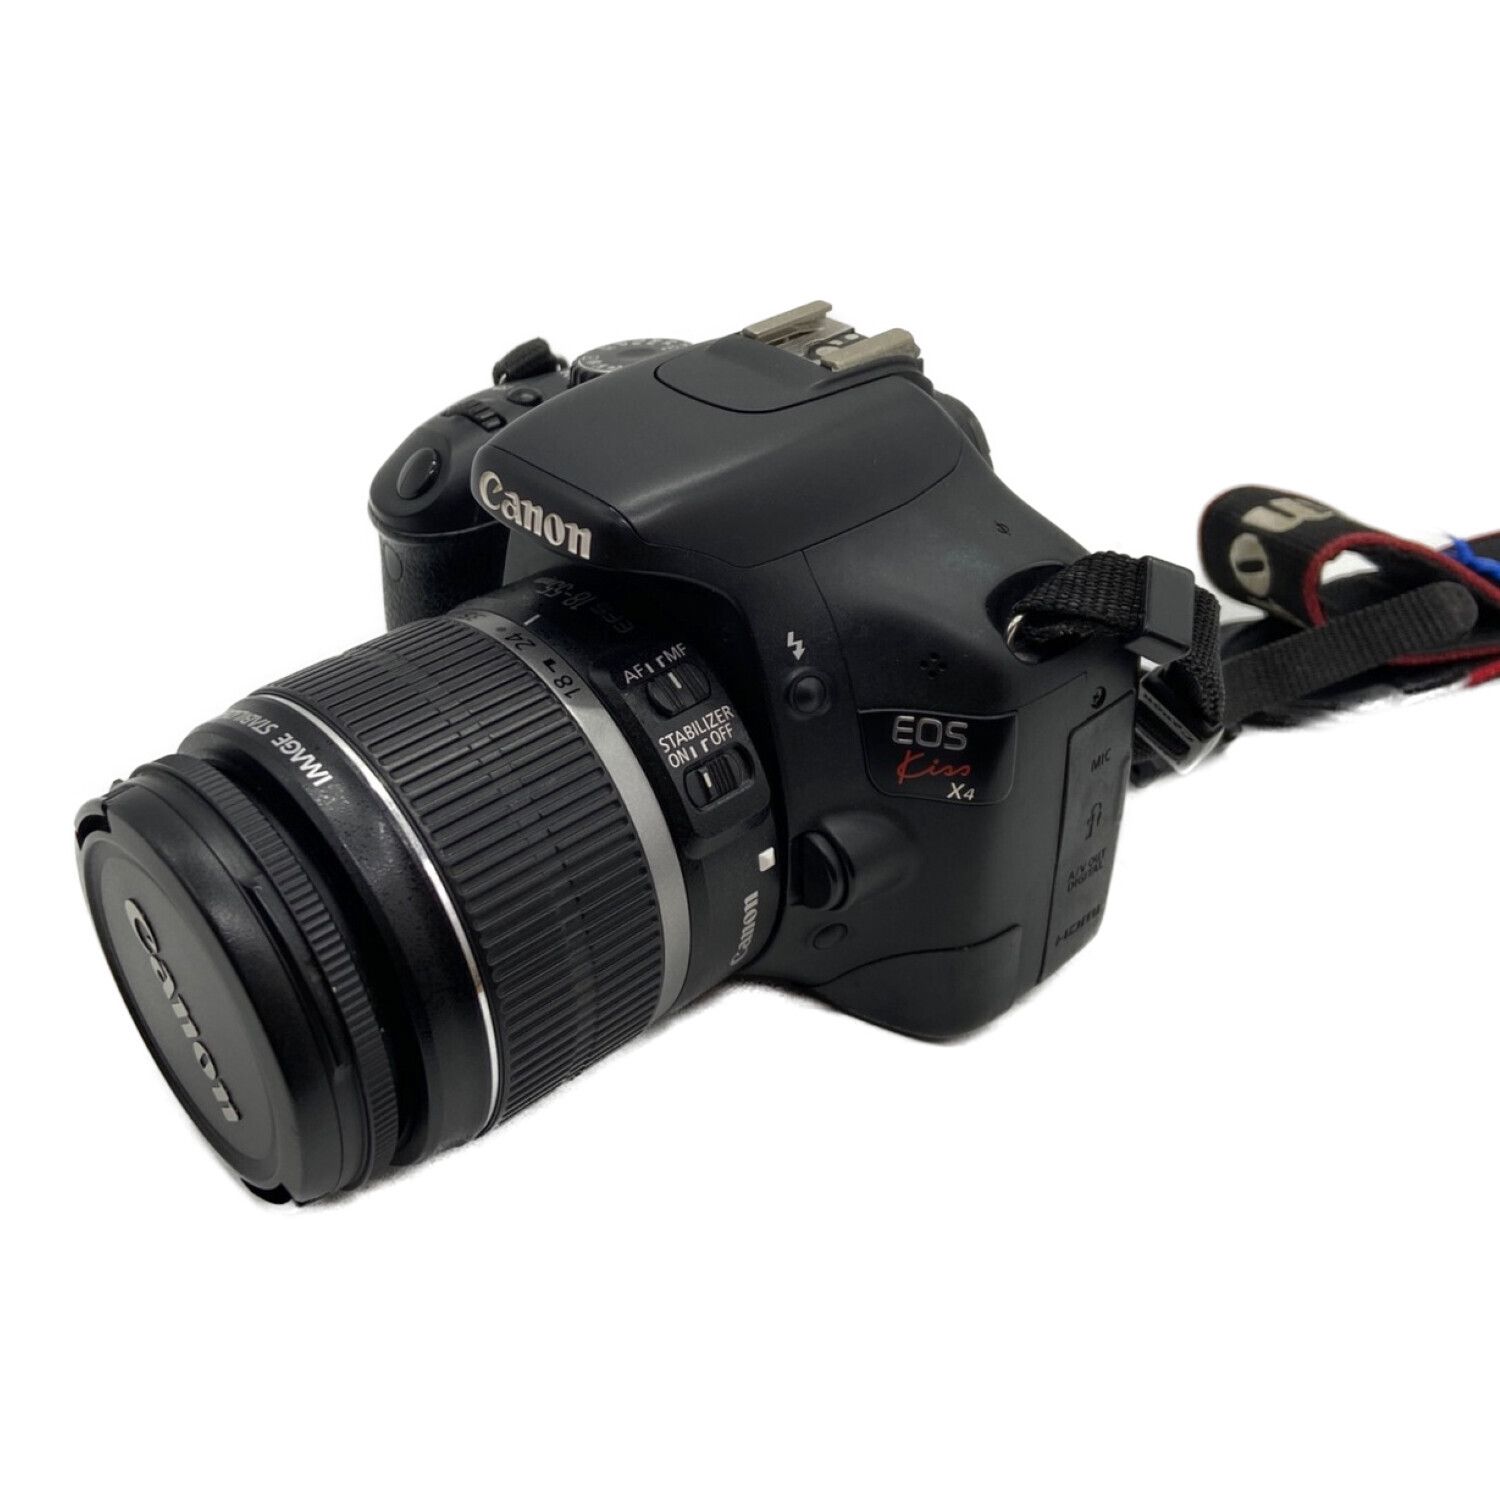 CANON (キャノン) デジタル一眼レフカメラ EOS Kiss X4 EF-S18-135